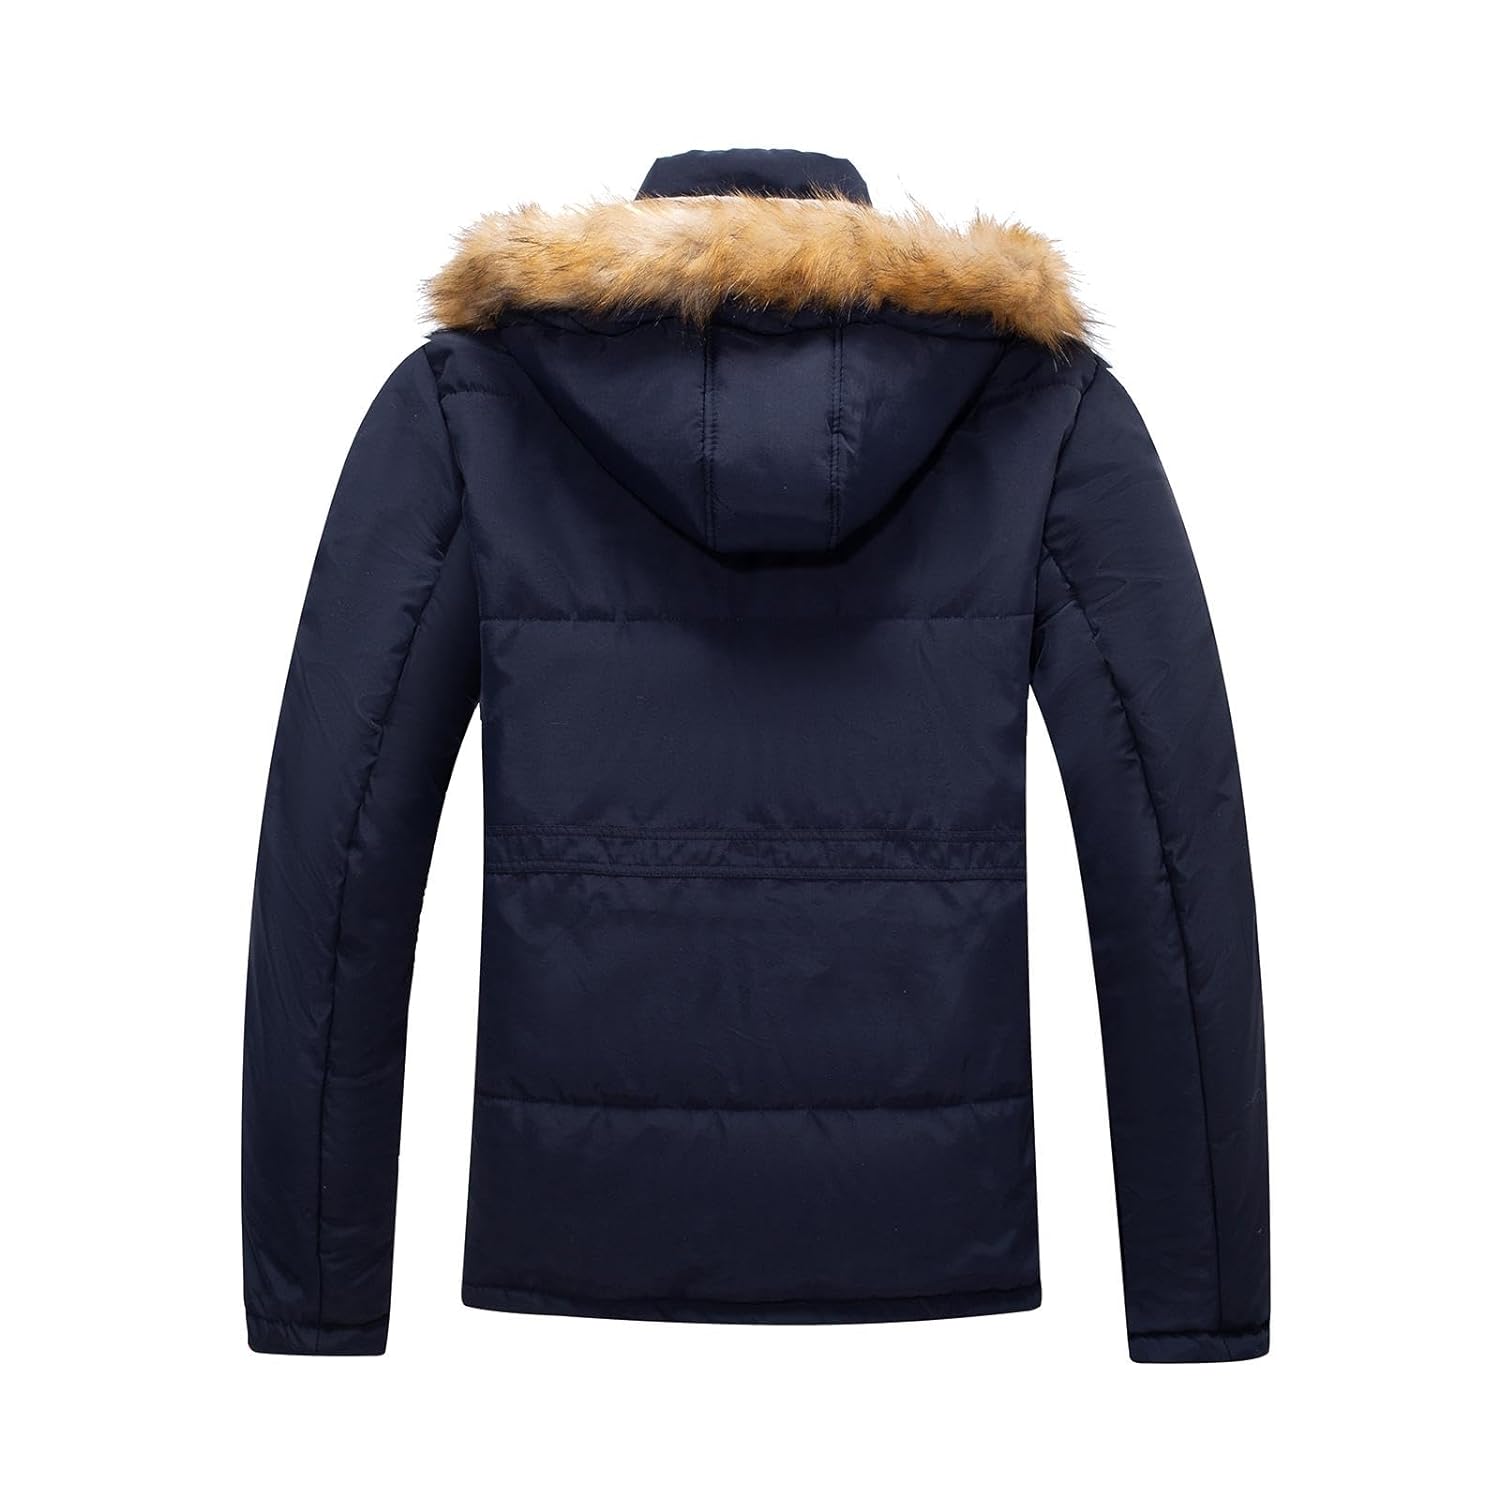 Yozai Mens Winter Parka Insulated Warm Jacket Military Coat Faux Fur with Pockets and Detachable Fur Hood 373 Navy Medium